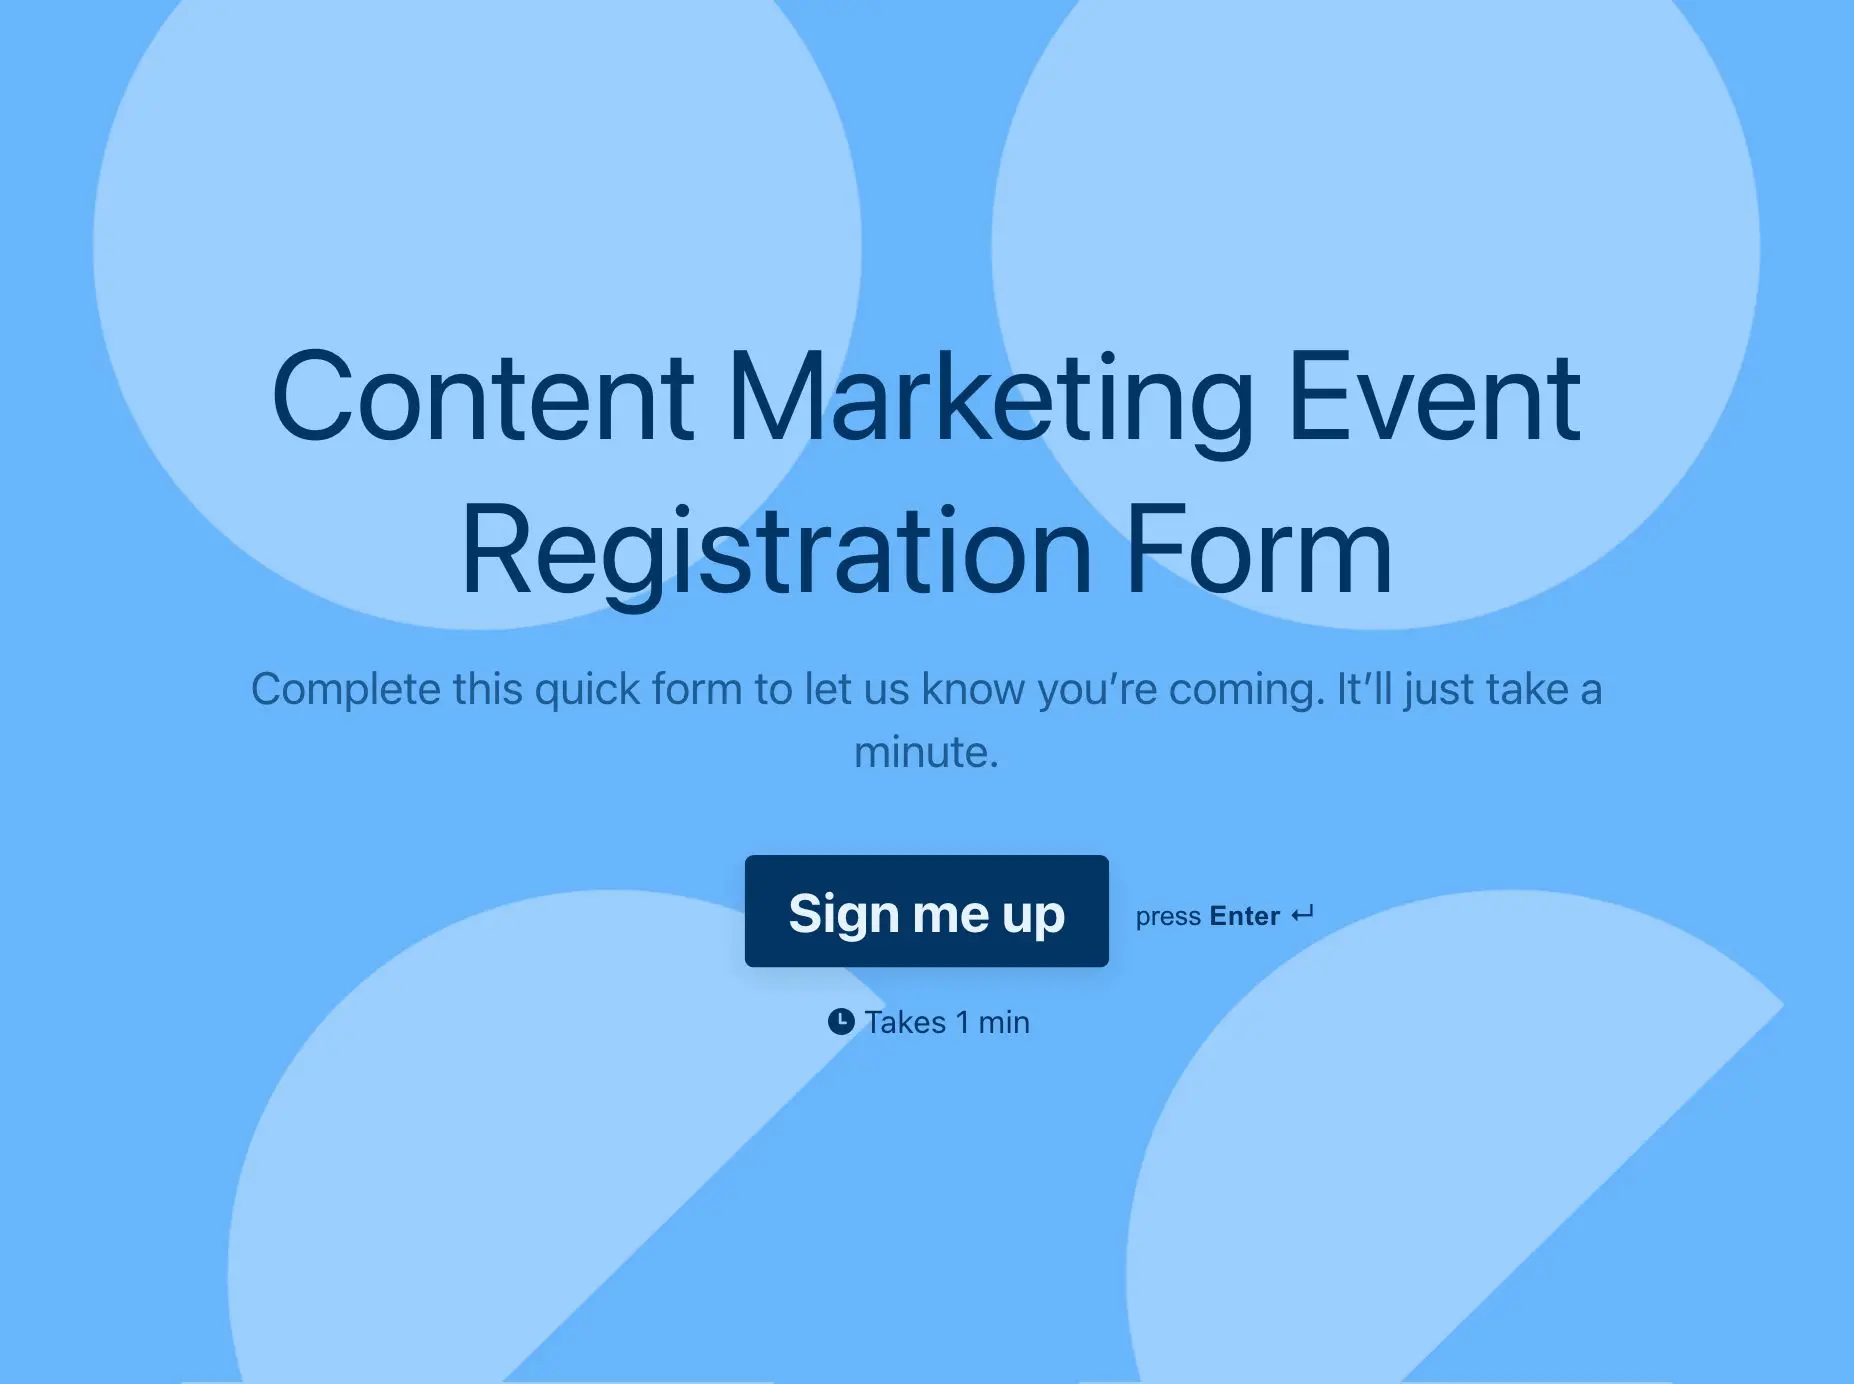 Content Marketing Event Registration Form Template Hero